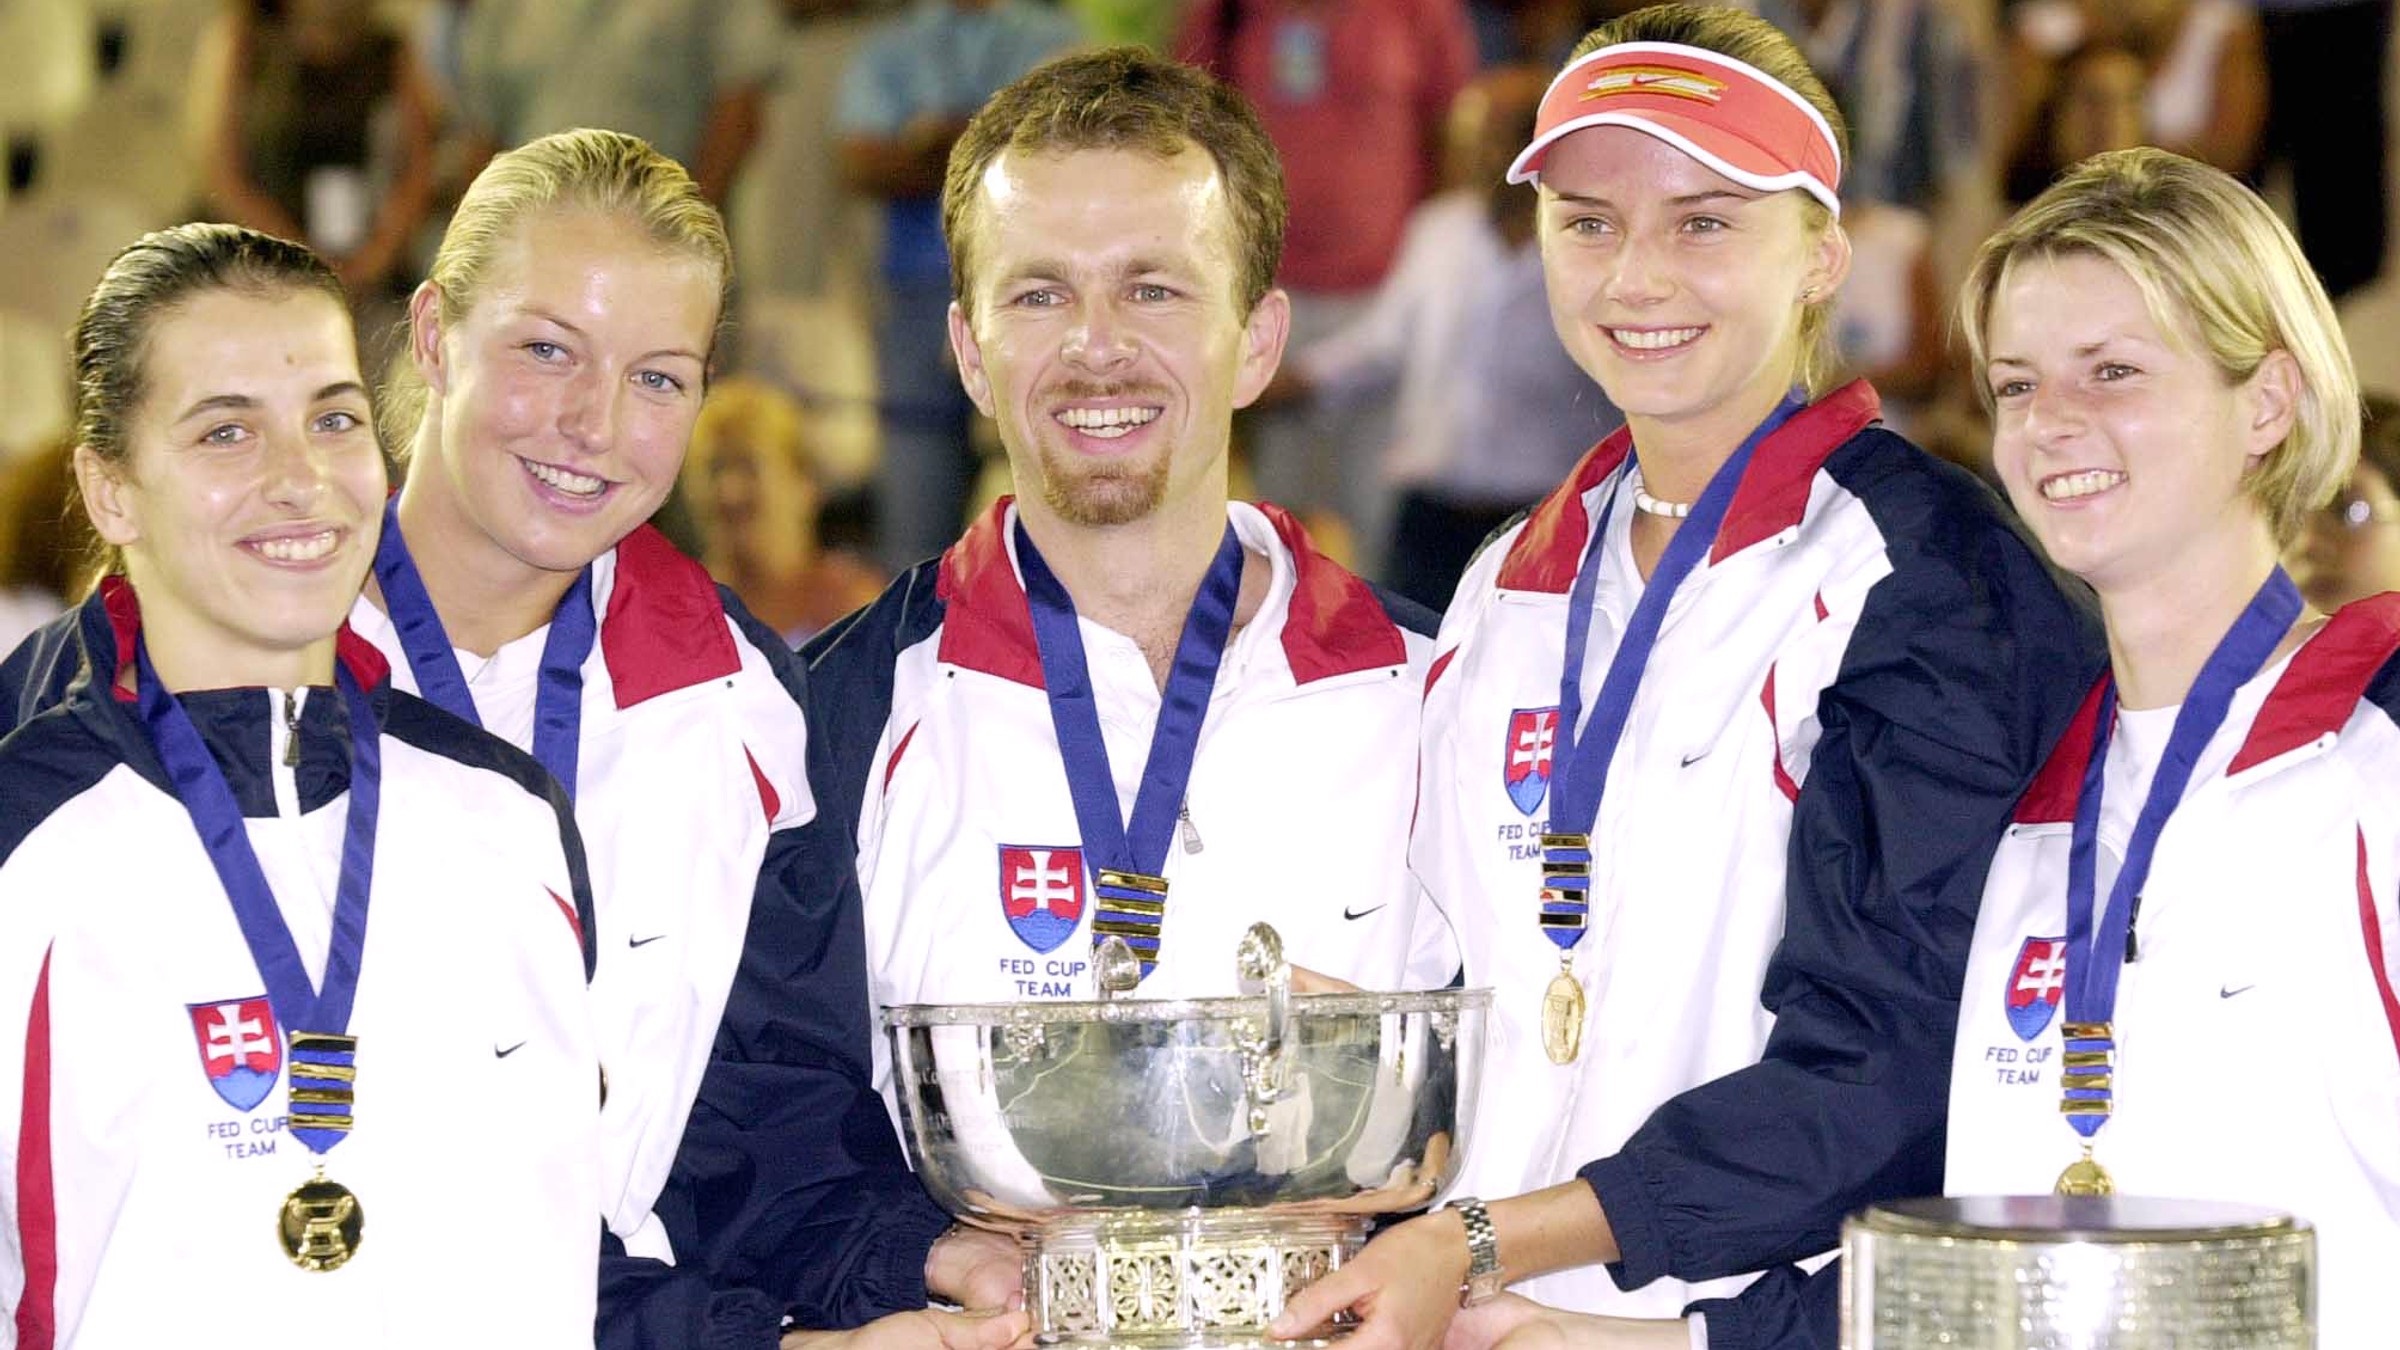 Víťazný slovenský fedcupový tím - Janette Husárová, Henrieta Nagyová, kapitán Tomáš Malík, Daniela Hantuchová a Martina Suchá.